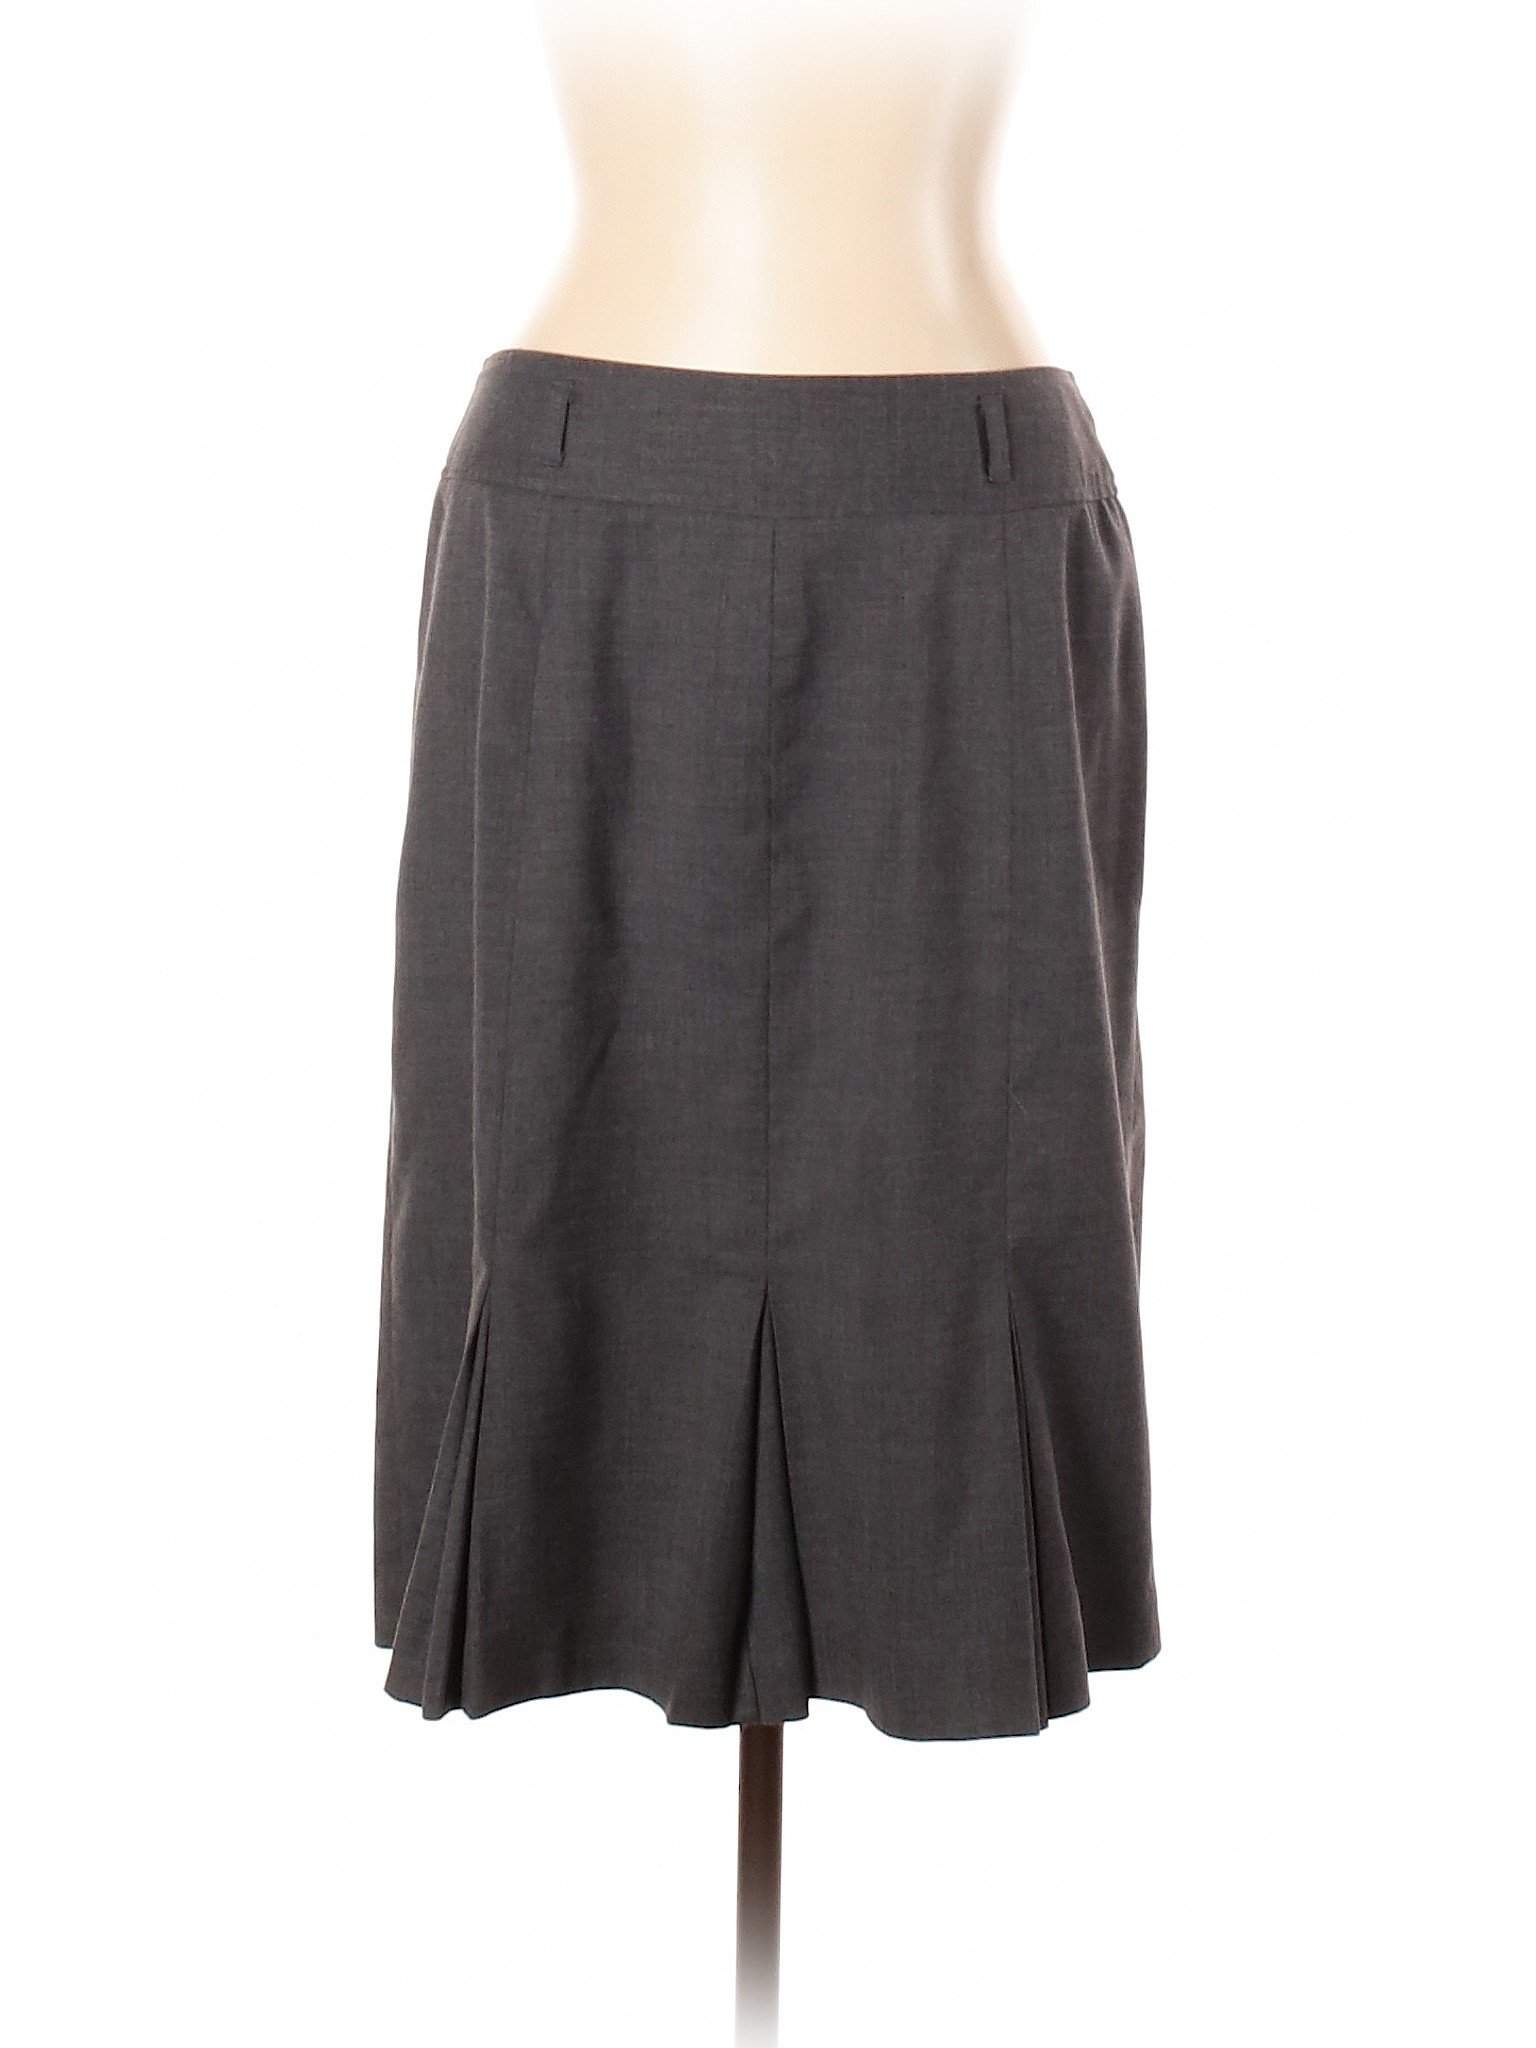 Style&Co Women Gray Casual Skirt 12 | eBay